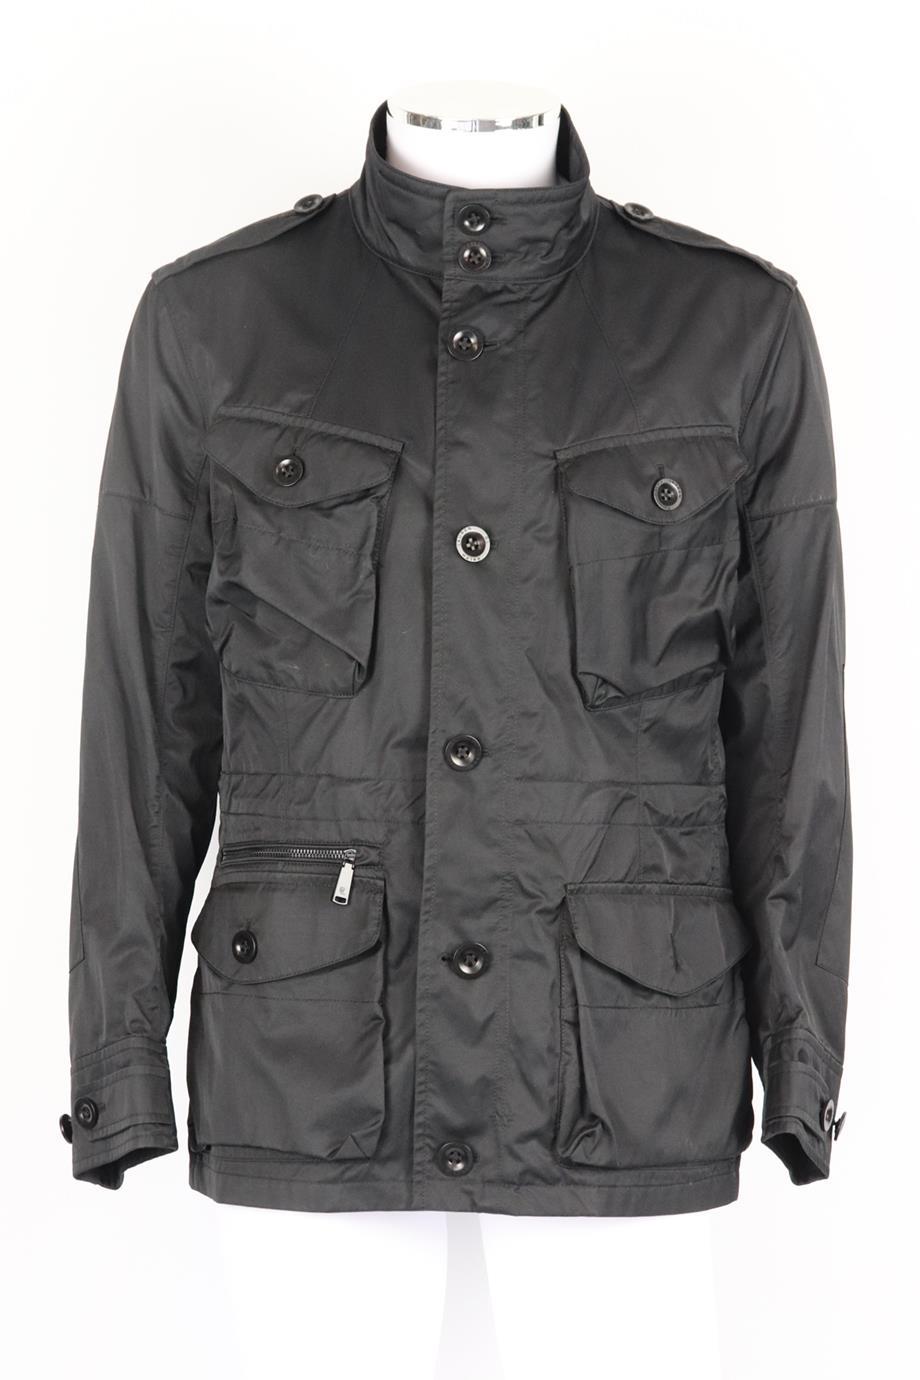 Ralph Lauren Purple Label men's shell utility jacket. Black. Long sleeve, crewneck. Zip fastening at front. 54% Cotton, 46% nylon; lining: 58% nylon, 42% polyester. Size: Large (IT 50, EU 50, UK/US Chest 40). Shoulder to shoulder: 17.5 in. Bust: 42